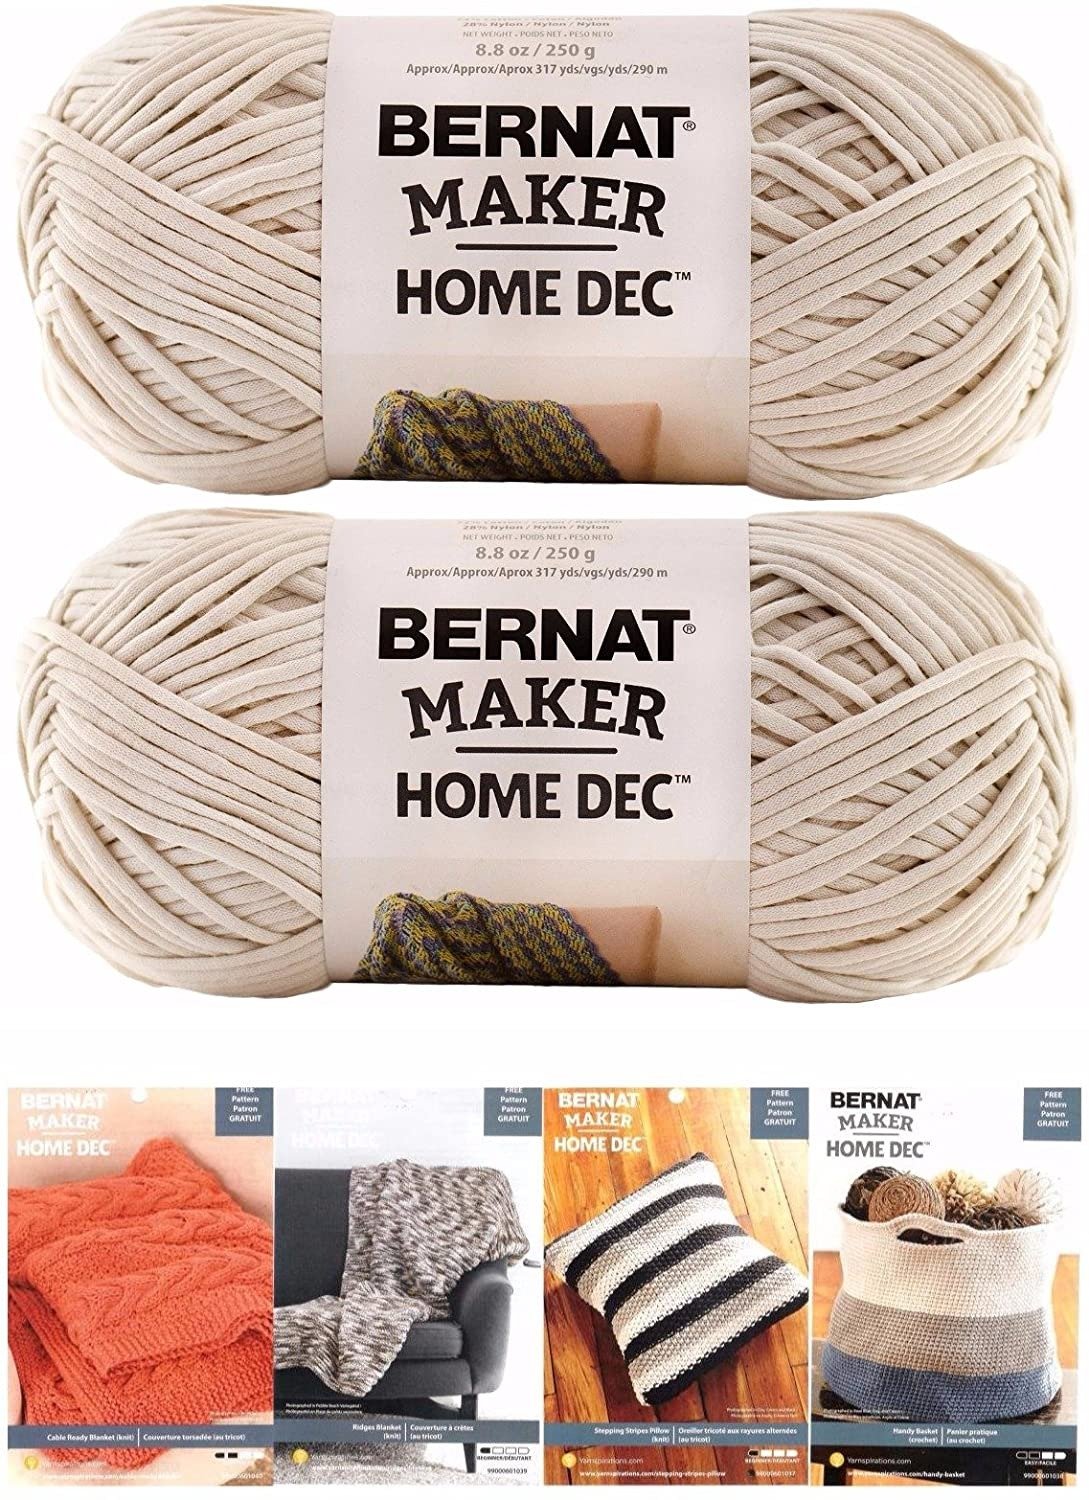 Bernat Maker Home Dec Corded Yarn Bundle 2 Skeins with 4 Patterns 8.8 Ounce Each Skein (Cream)